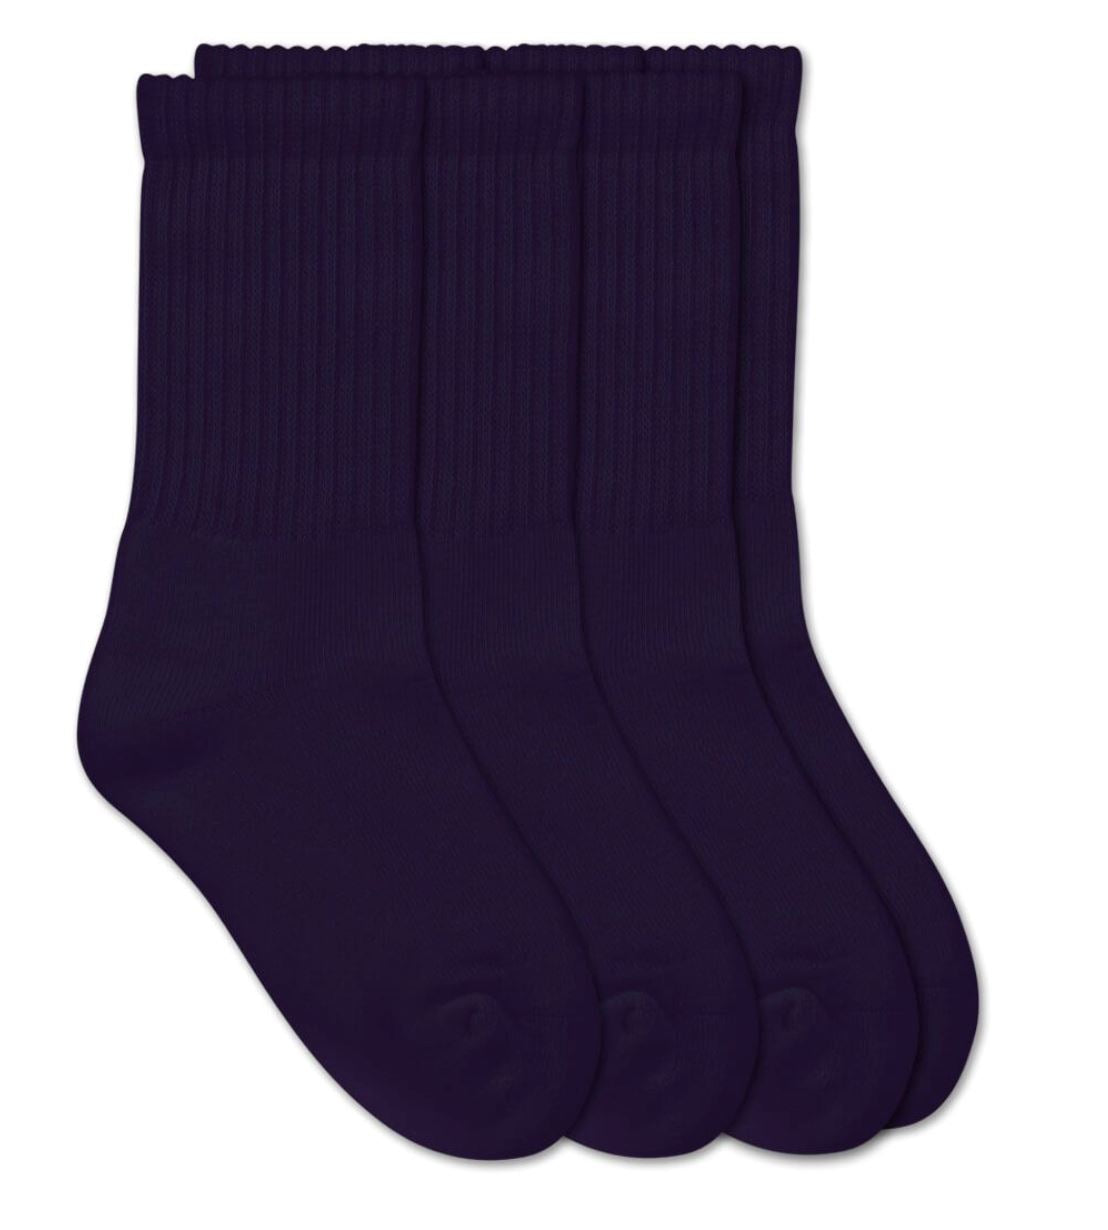 Navy Smooth Toe Crew Socks 3-pack 110 ACCESSORIES CHILD Jefferies Socks 6-11 